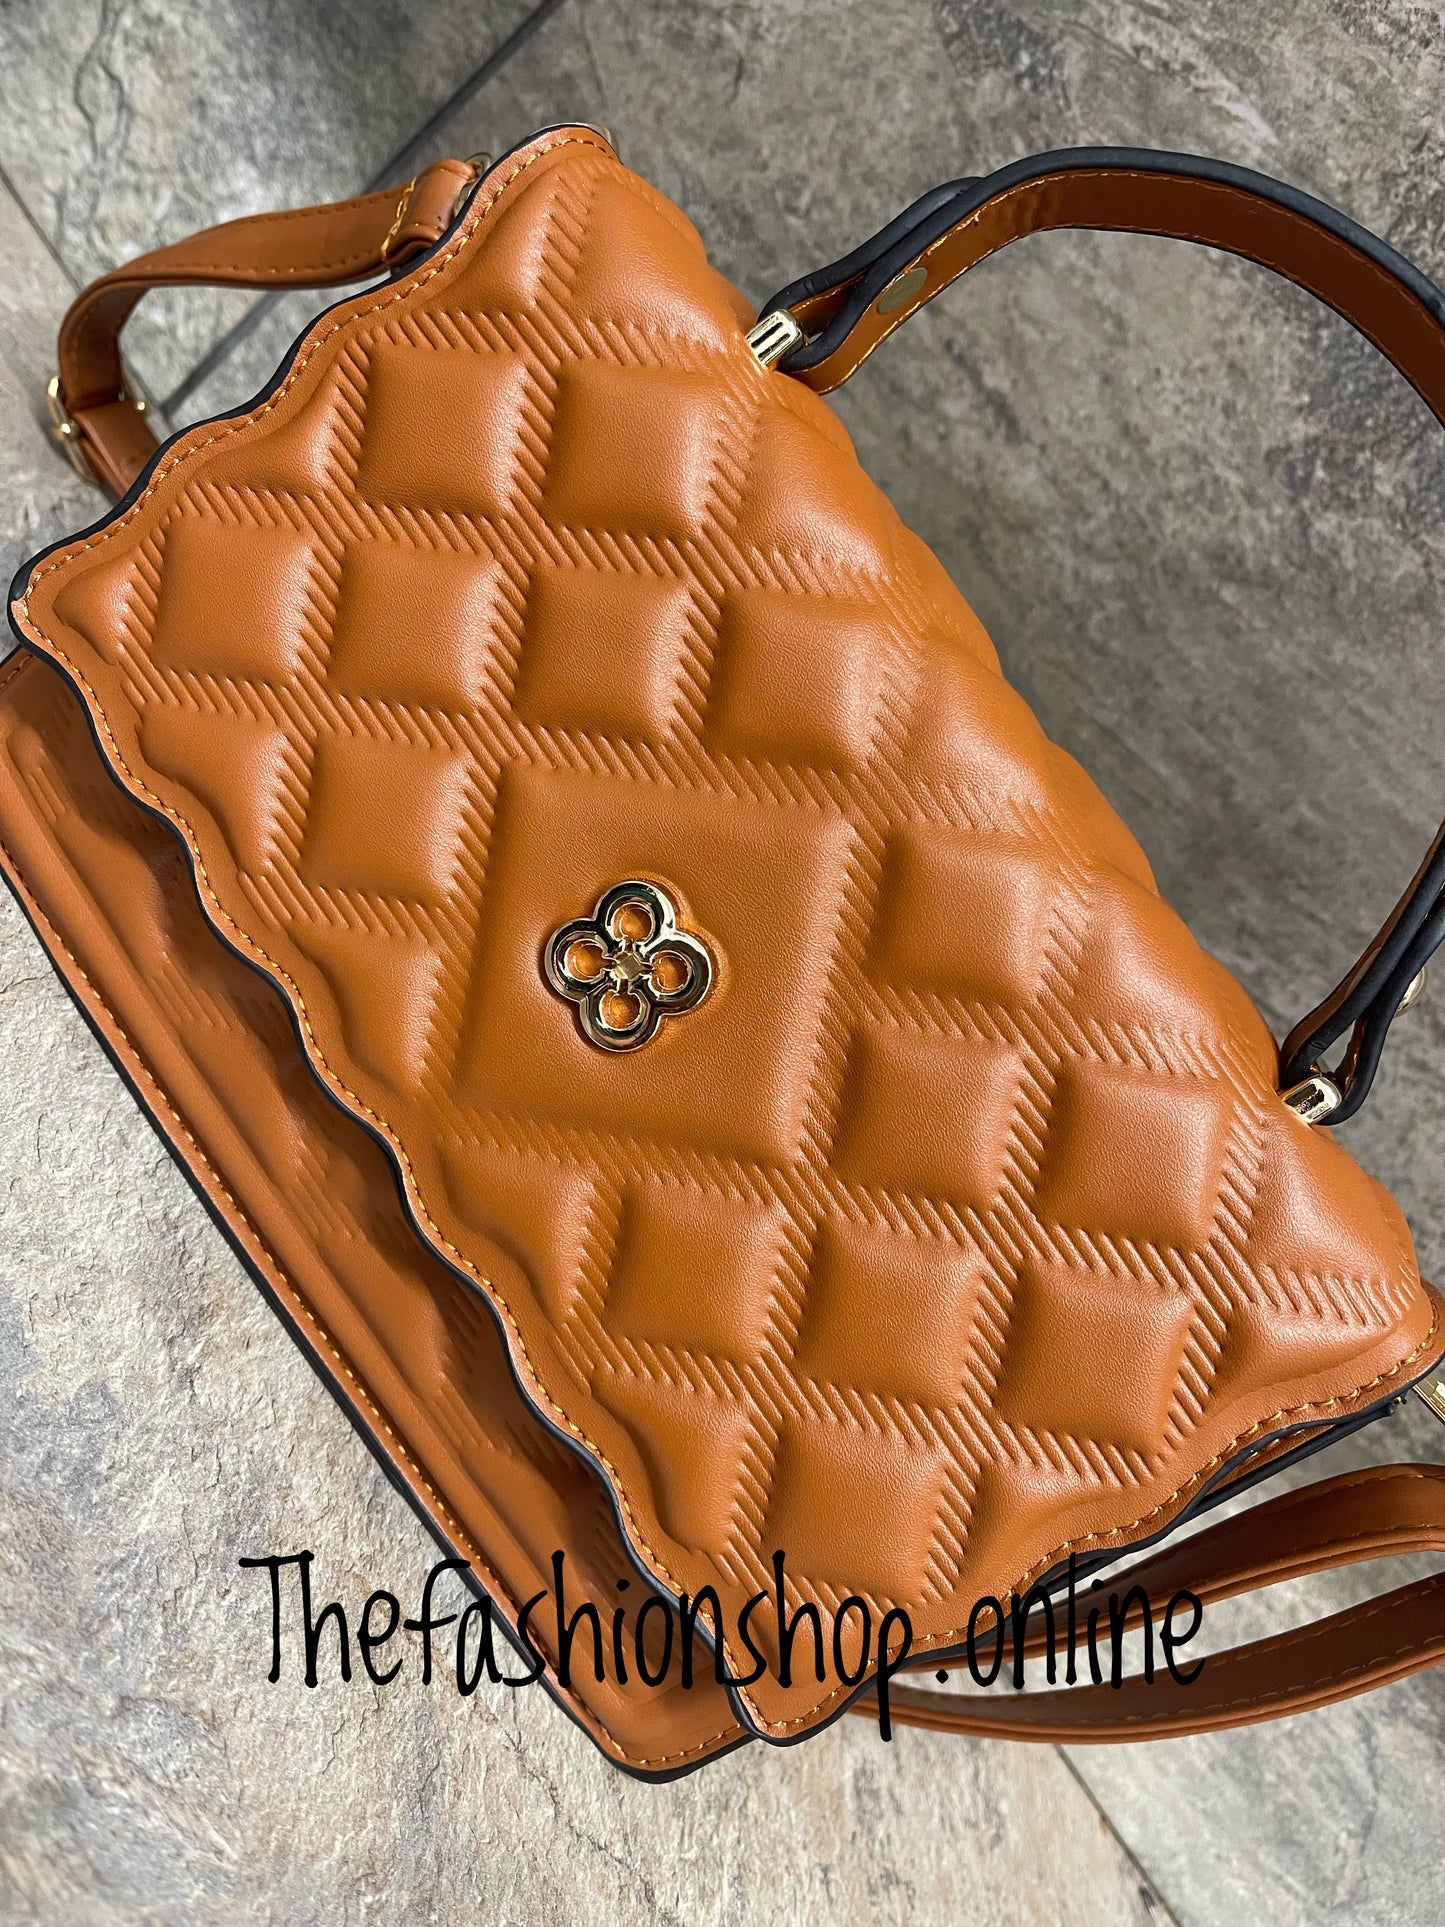 Tan textured satchel bag with purse